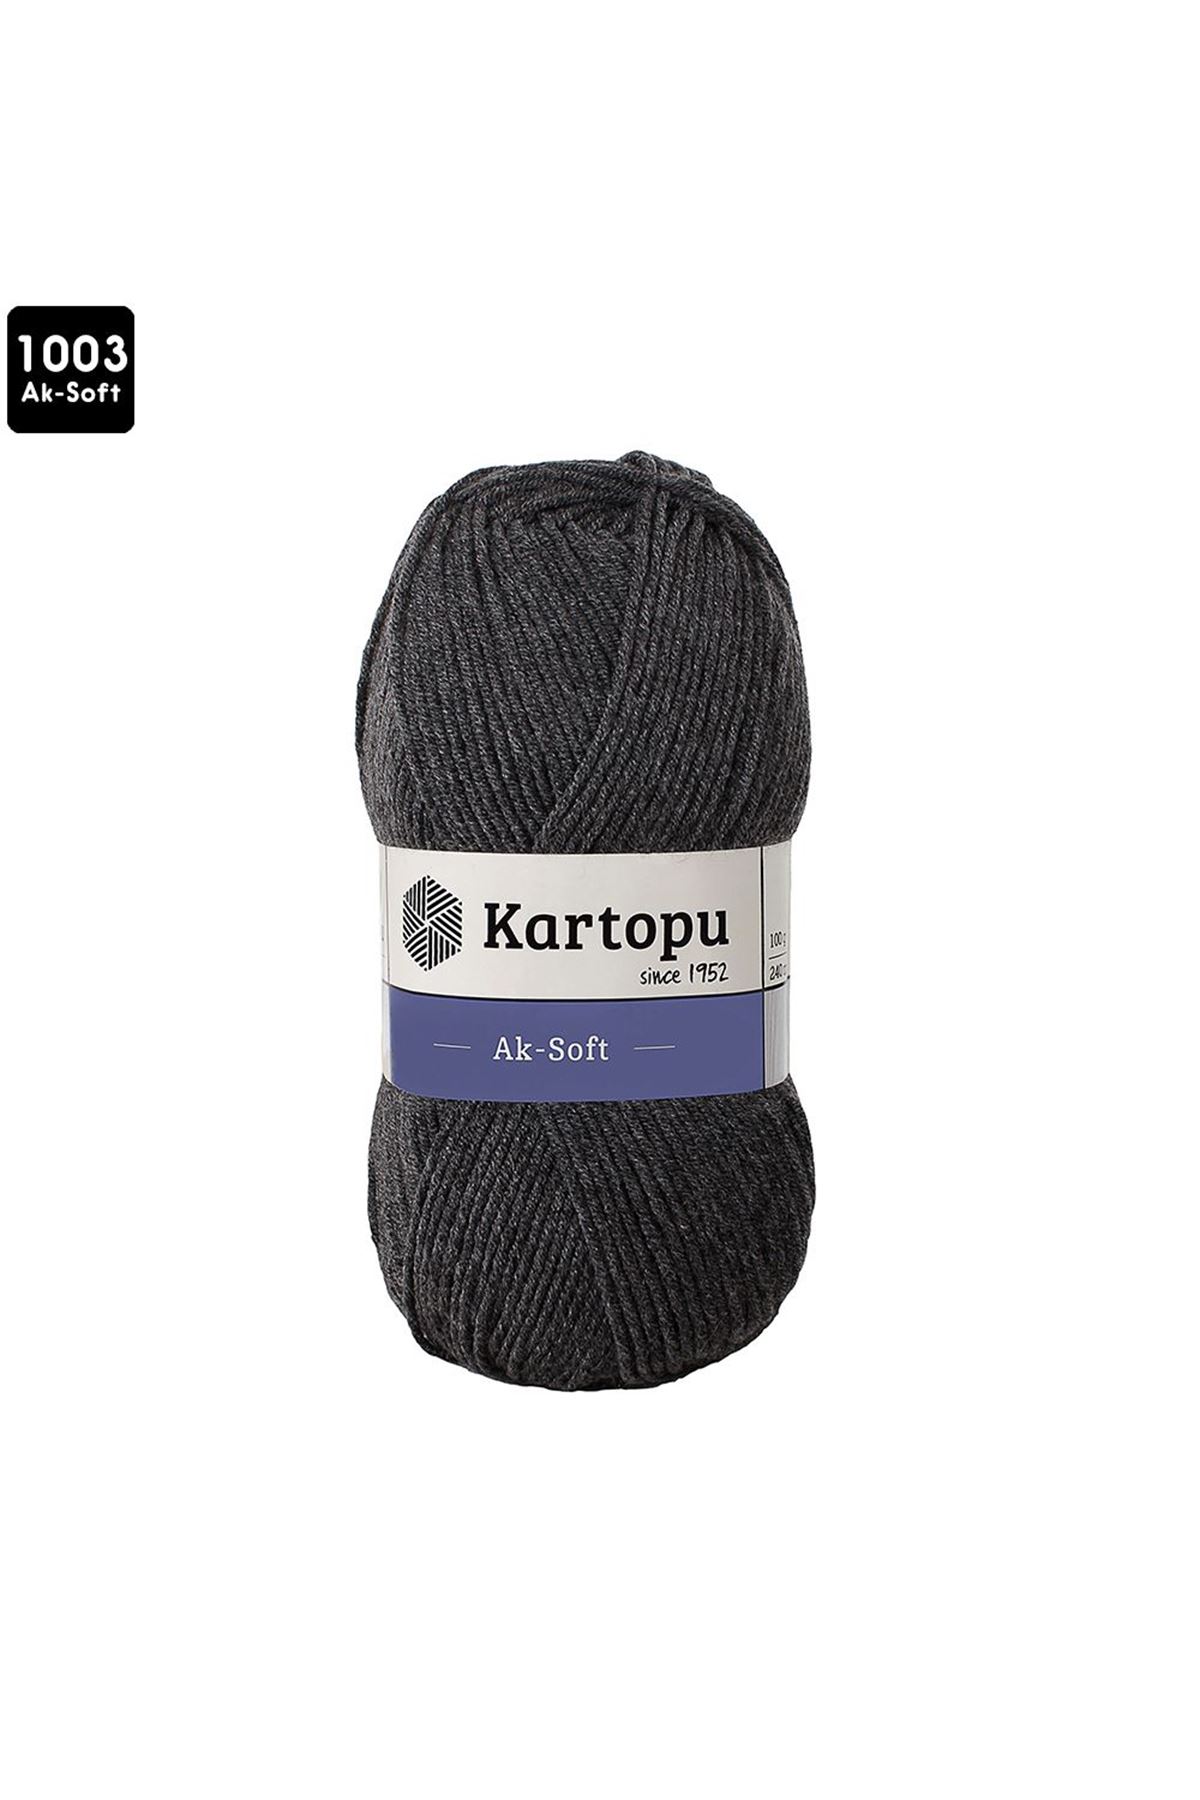 Kartopu Ak-Soft Renk No:1003